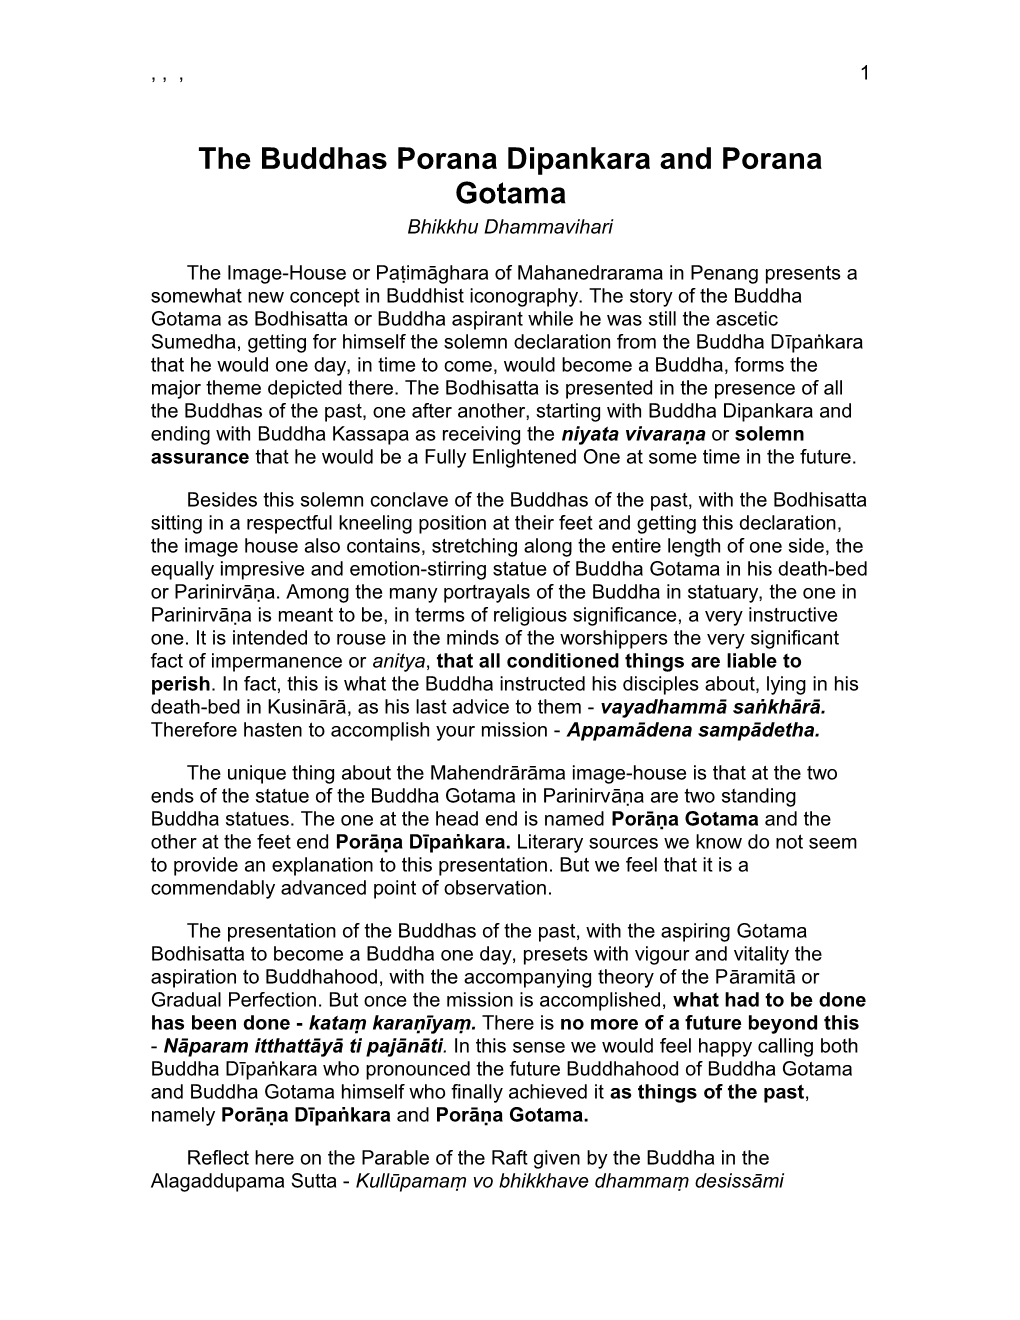 The Buddhas Porana Dipankara and Porana Gotama